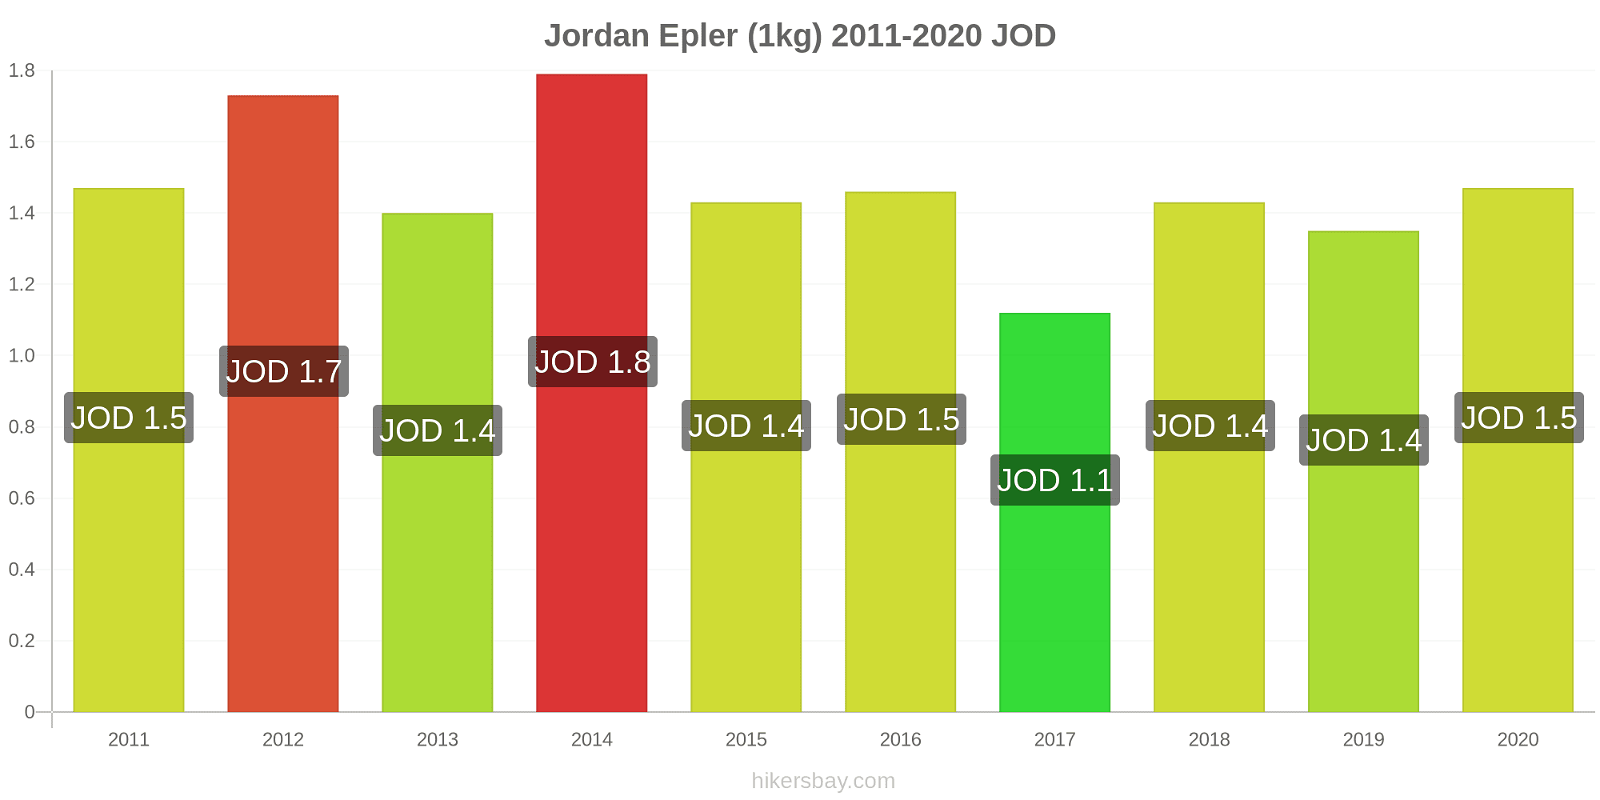 Jordan prisendringer Epler (1kg) hikersbay.com